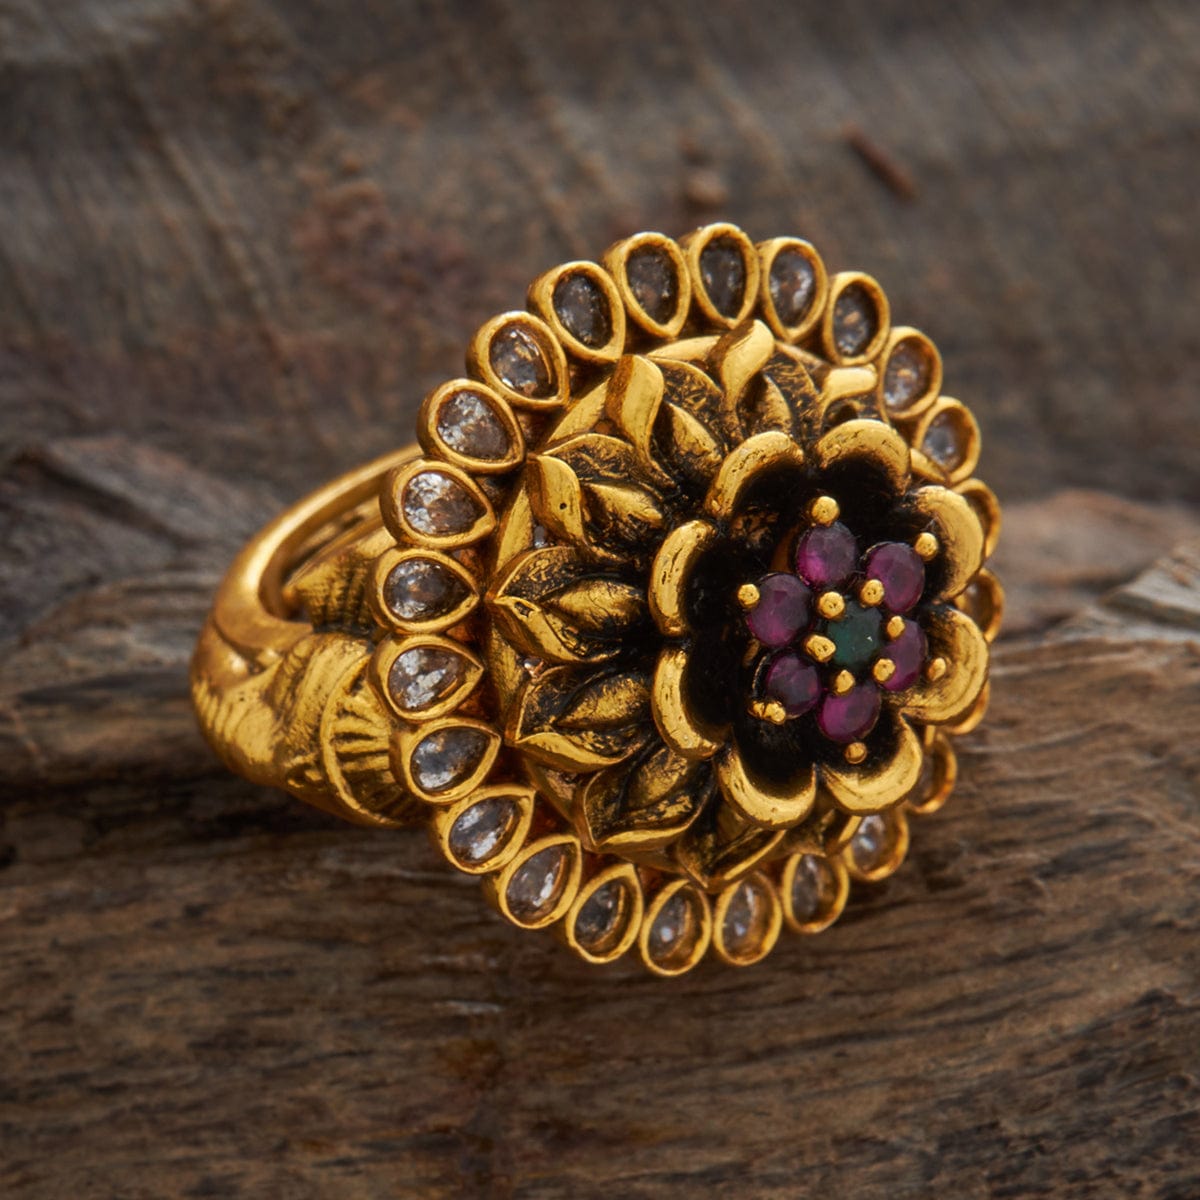 1 Gram Gold Forming Ganpati With Diamond Antique Design Ring For Men - Style  A891, सोने की अंगूठी - Soni Fashion, Rajkot | ID: 2849246115697